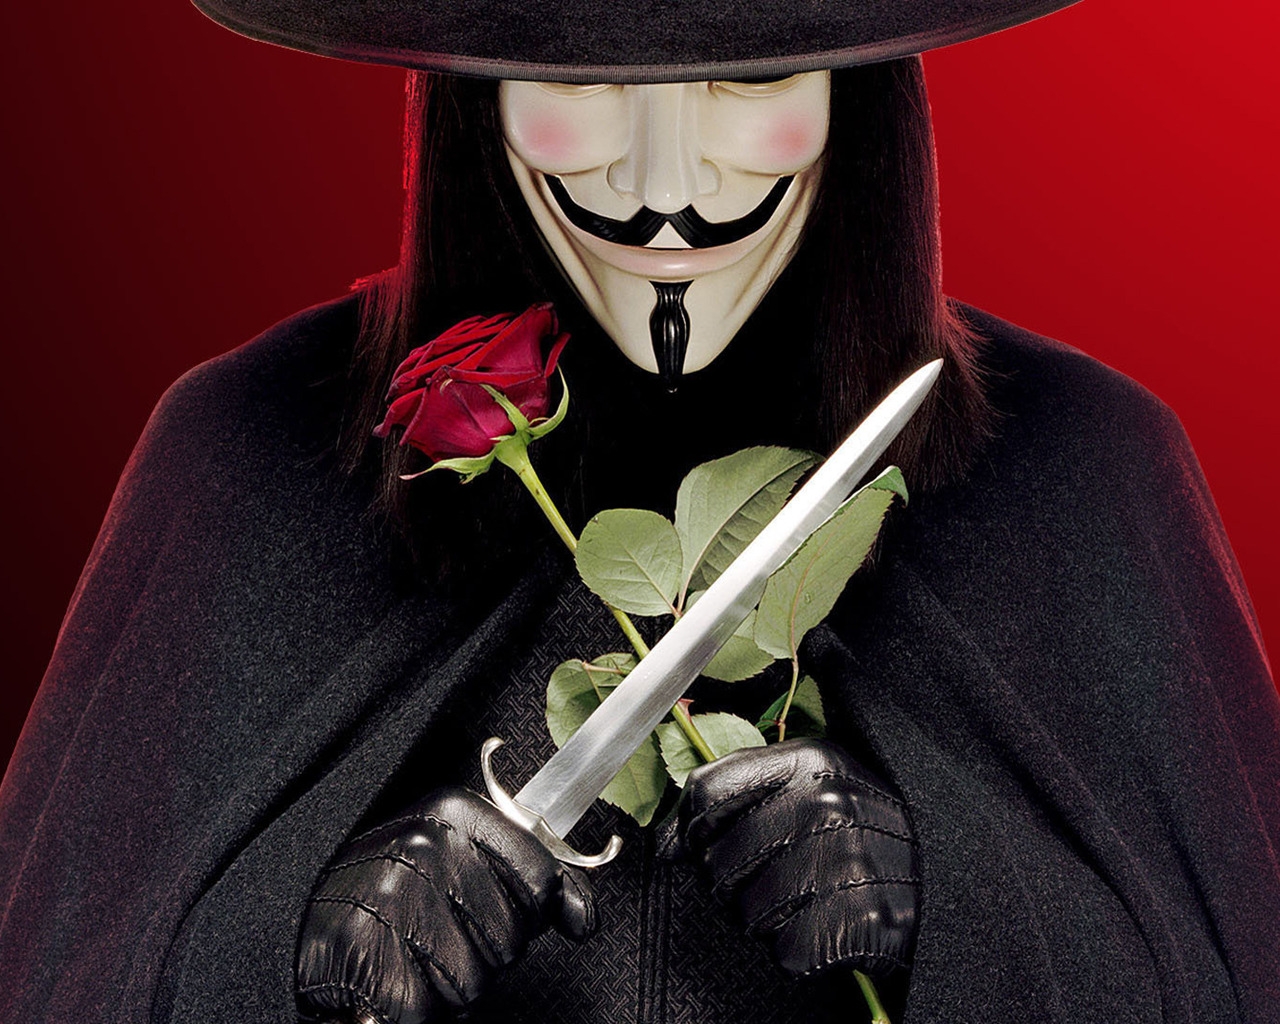 V for Vendetta Character for 1280 x 1024 resolution